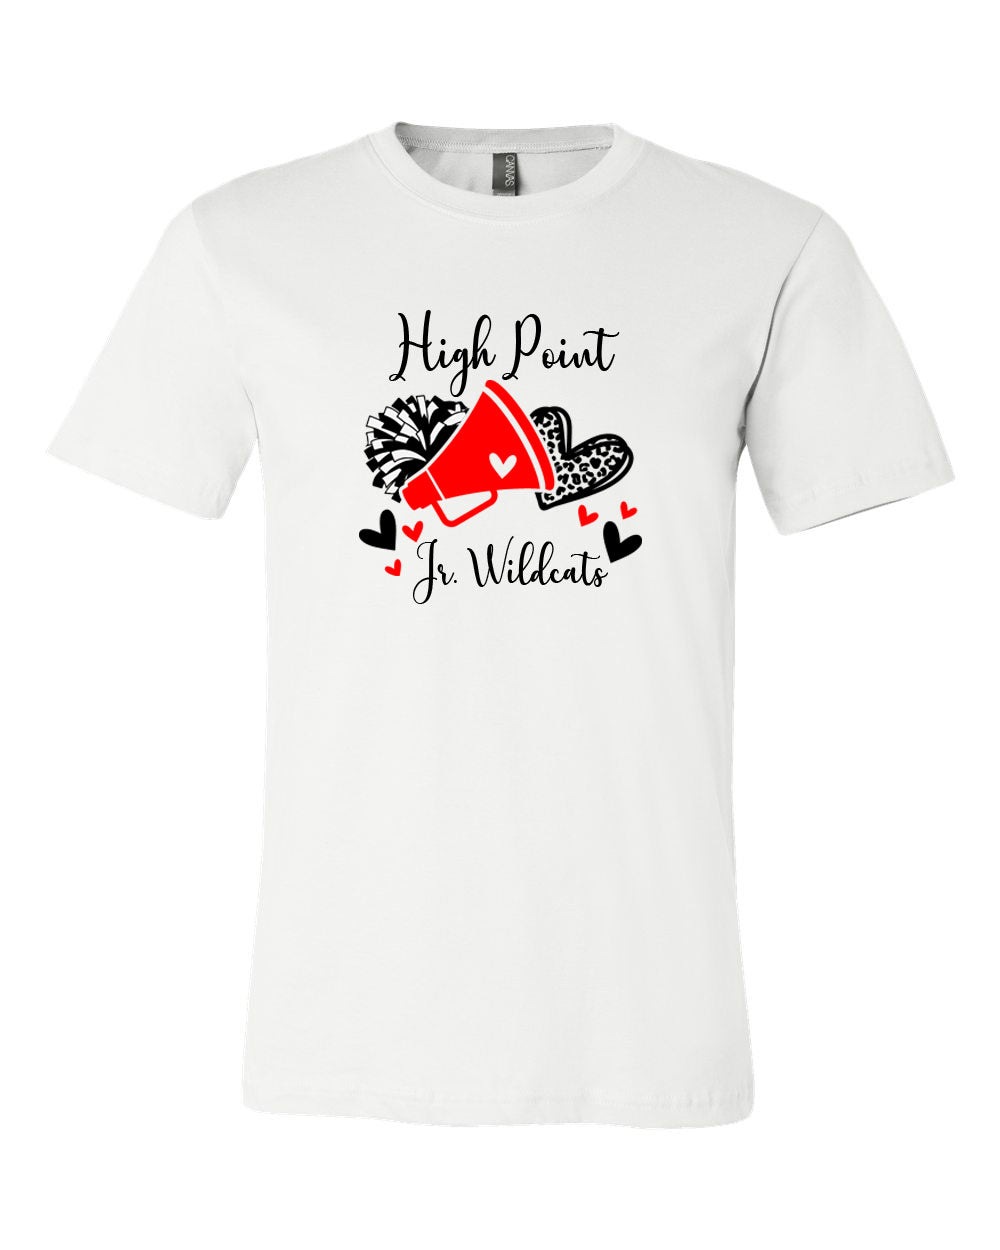 High Point Cheer design 6 T-Shirt